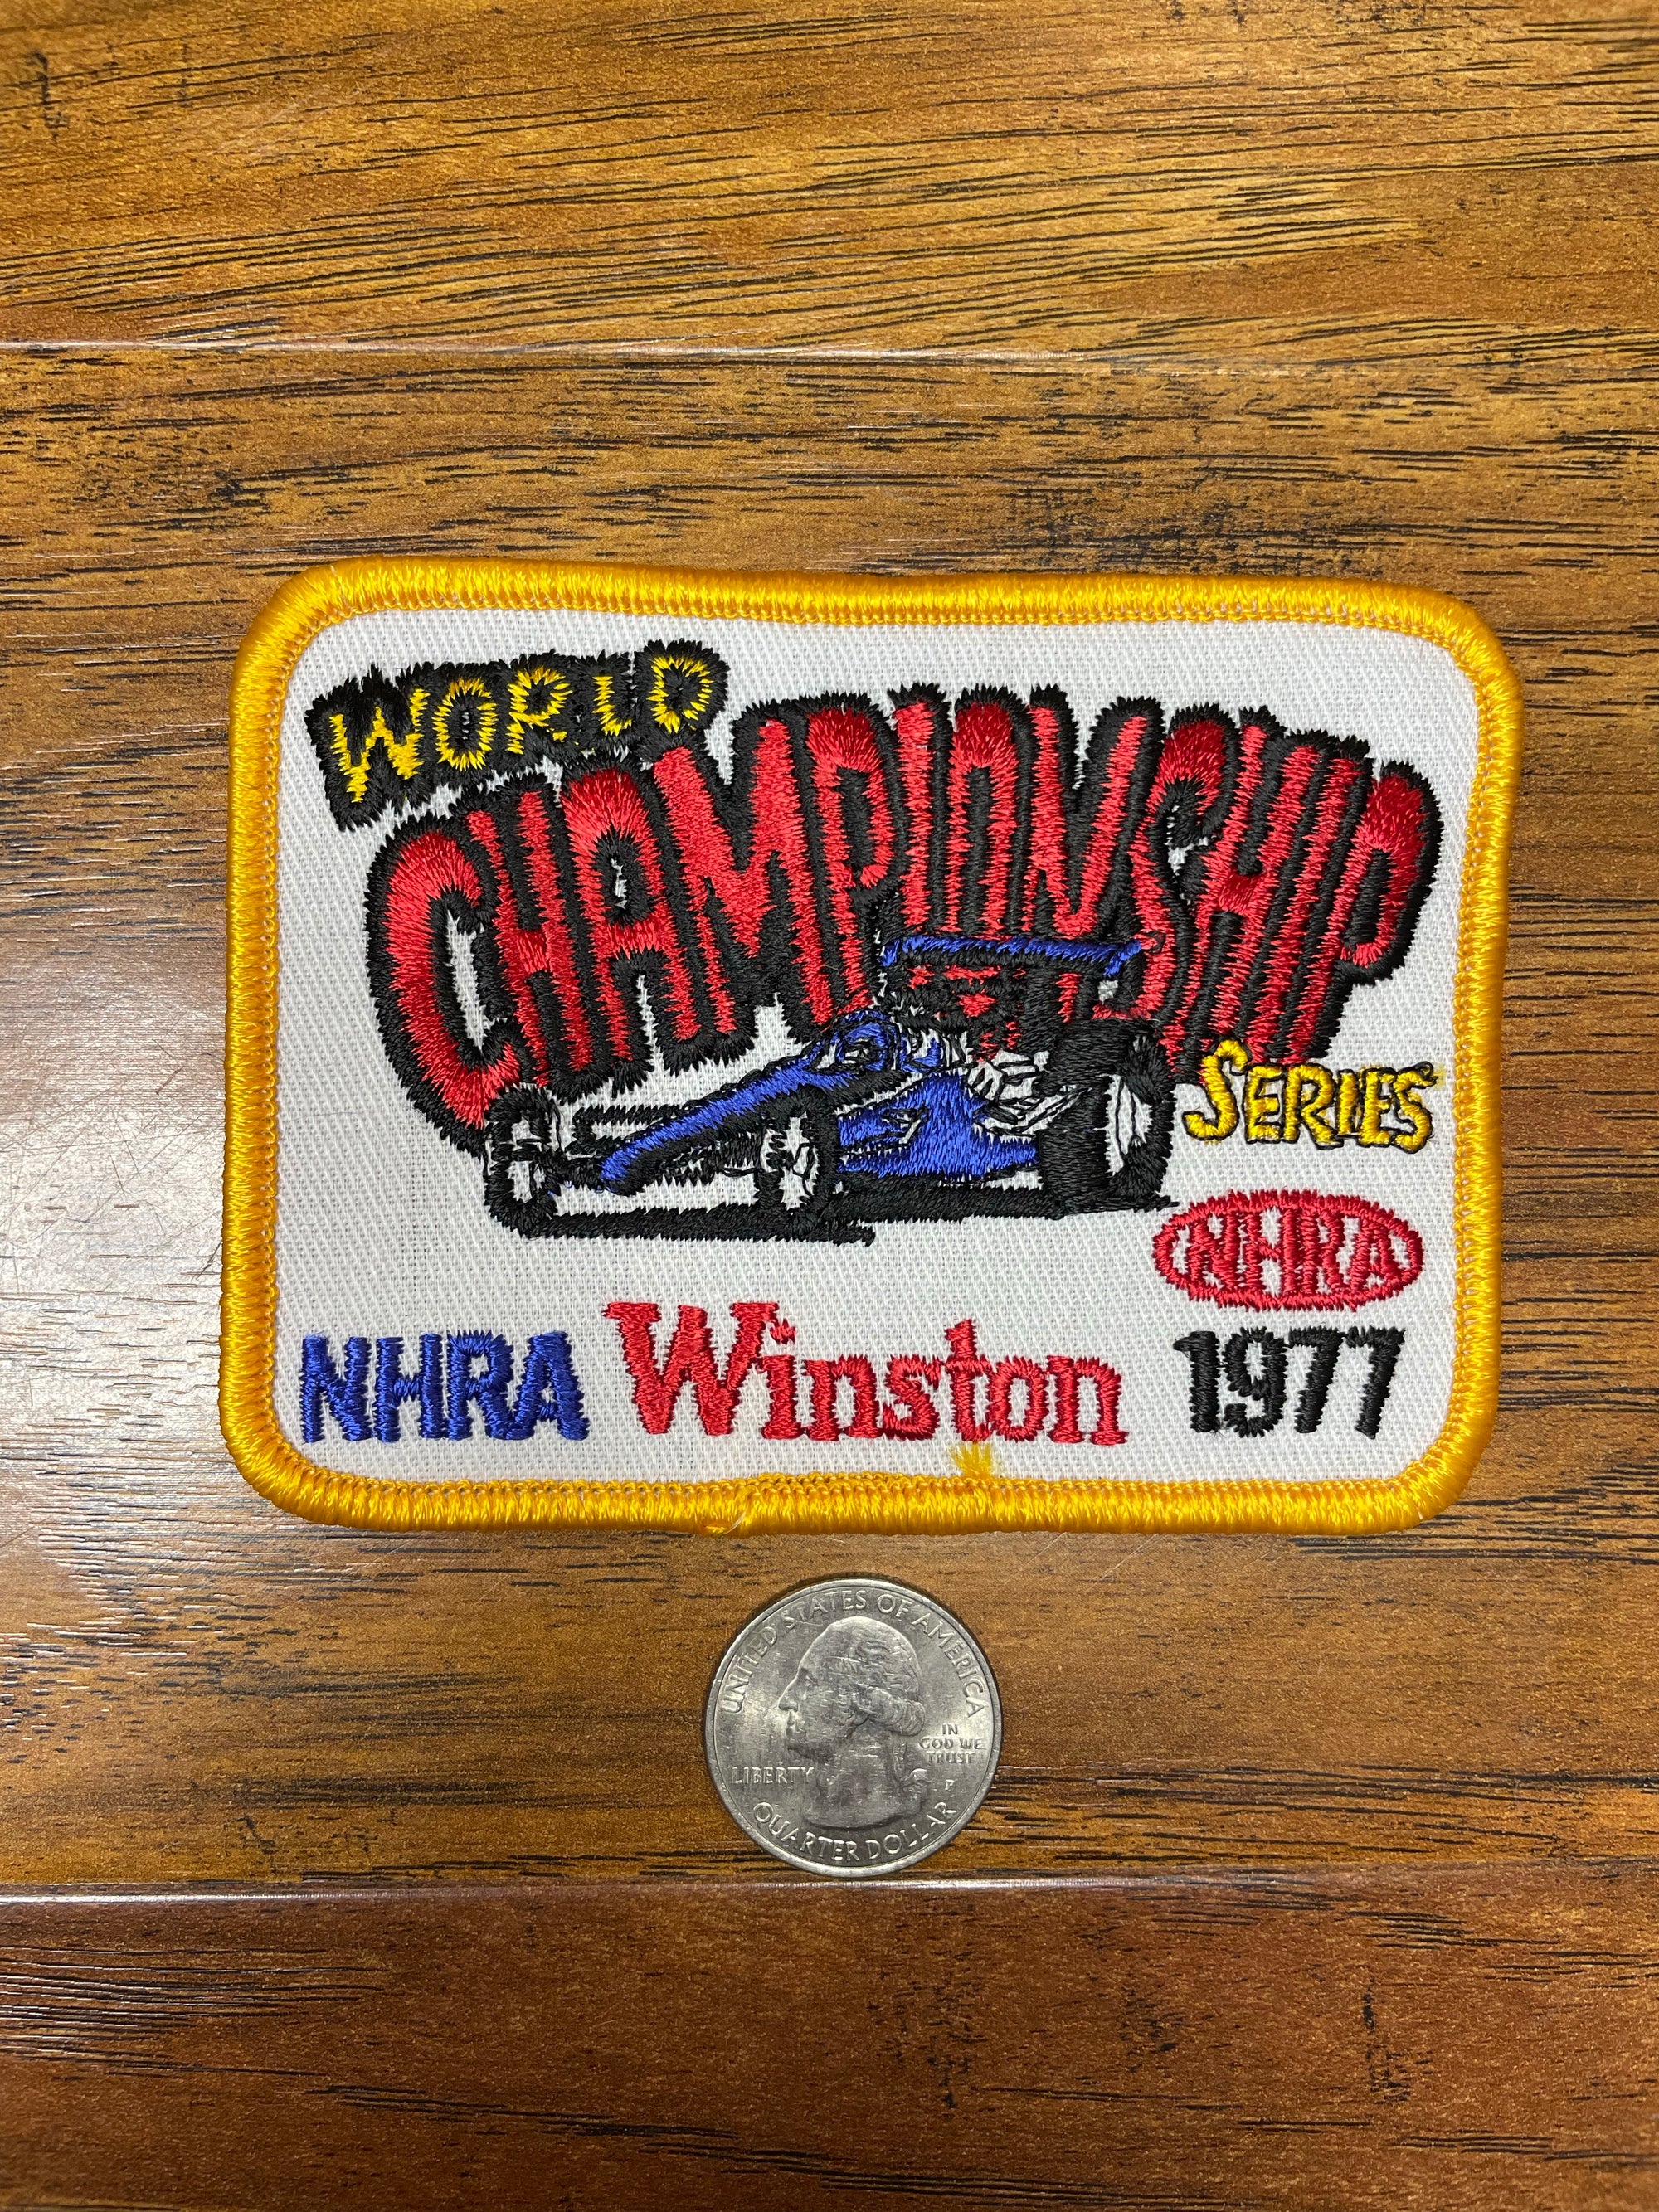 Vintage World Championship NHRA Winston 1977